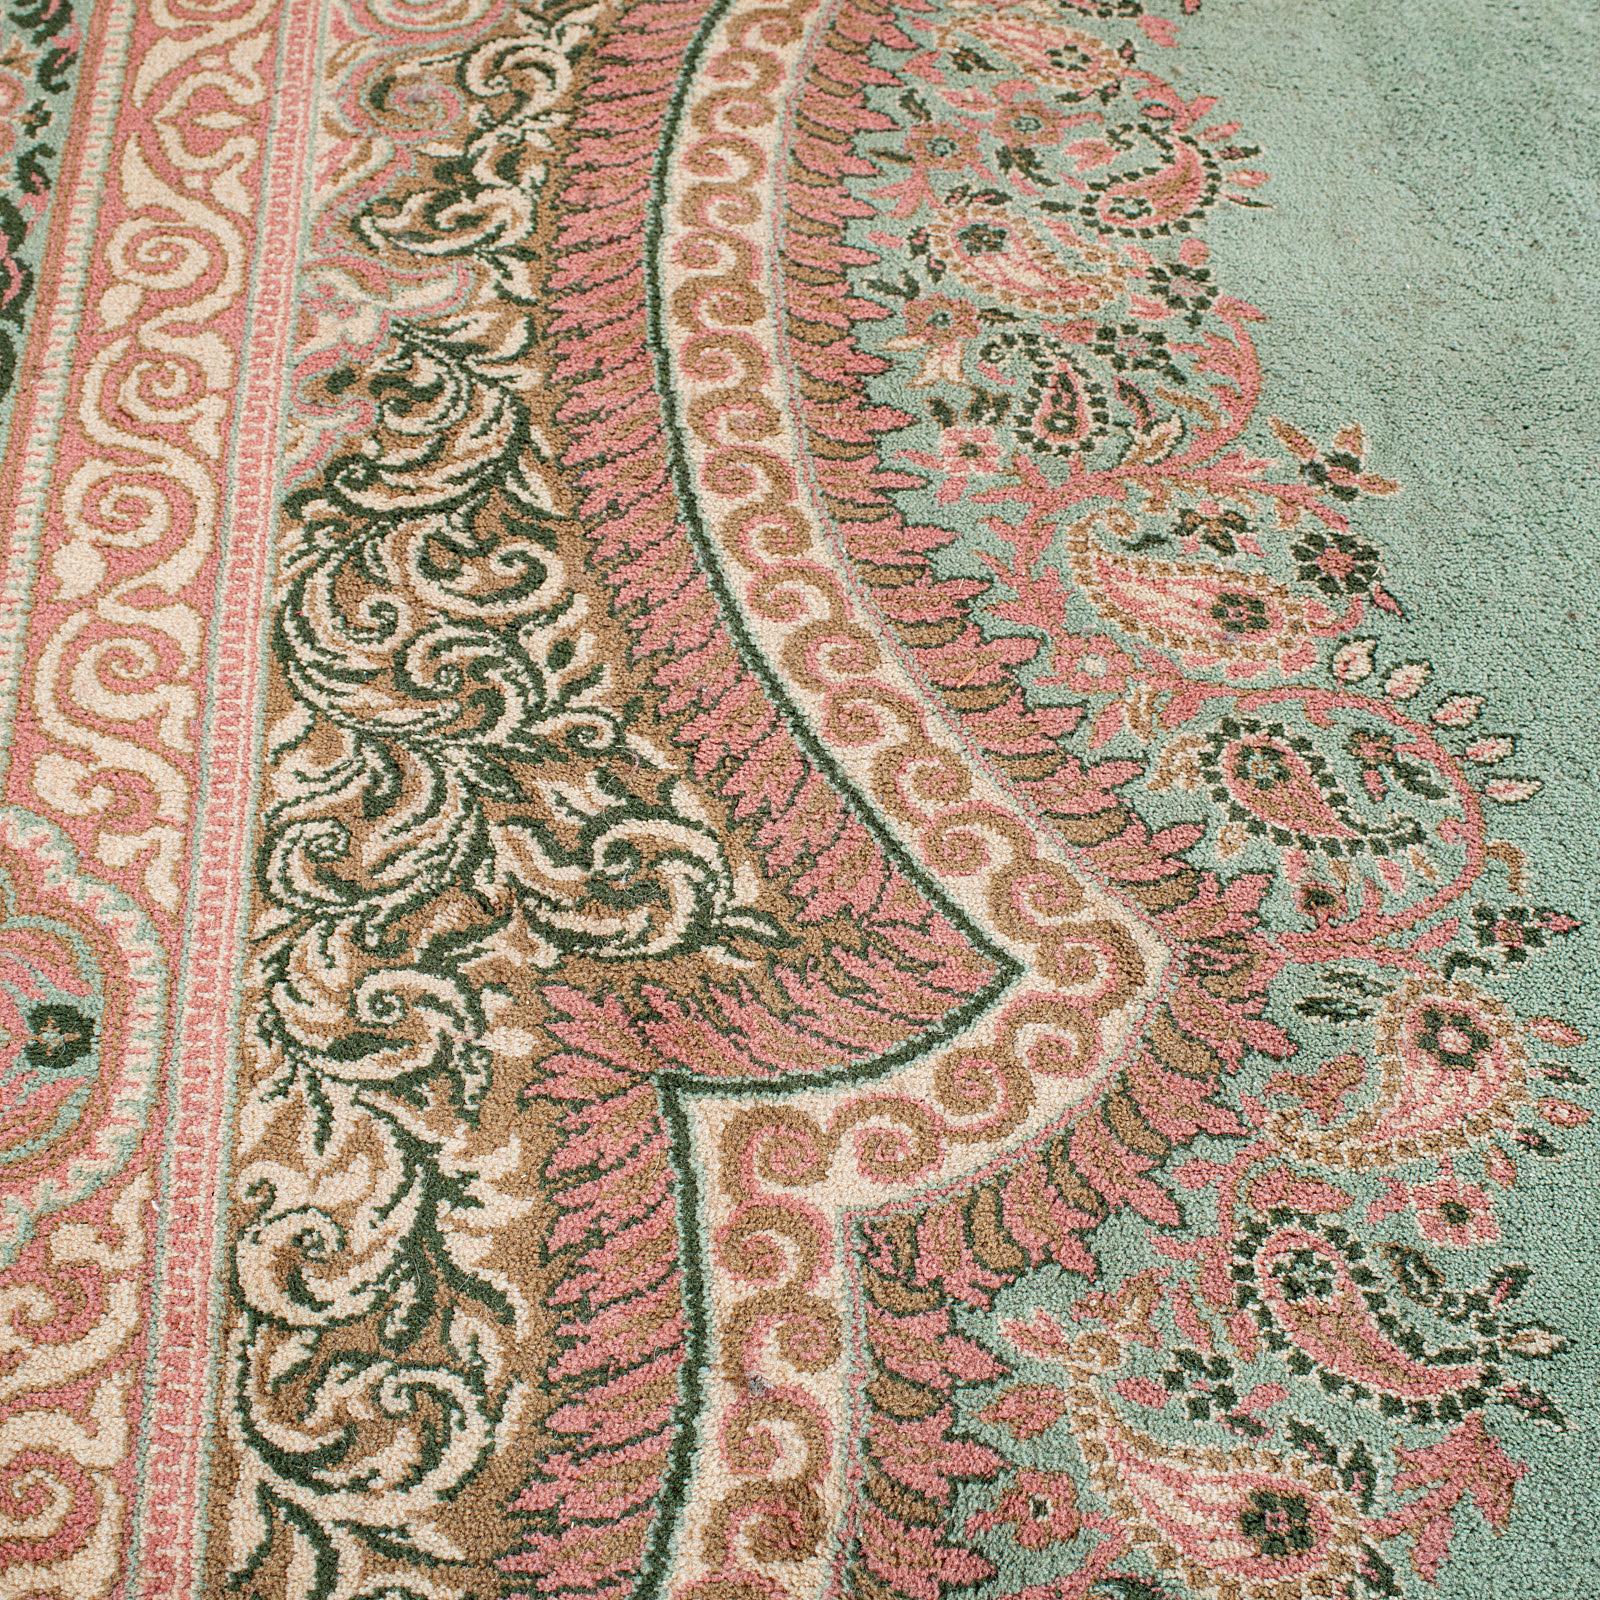 Very Large 16 Foot Vintage Keshan Rug, Persian, Room Sized, Decorative, Carpet For Sale 3